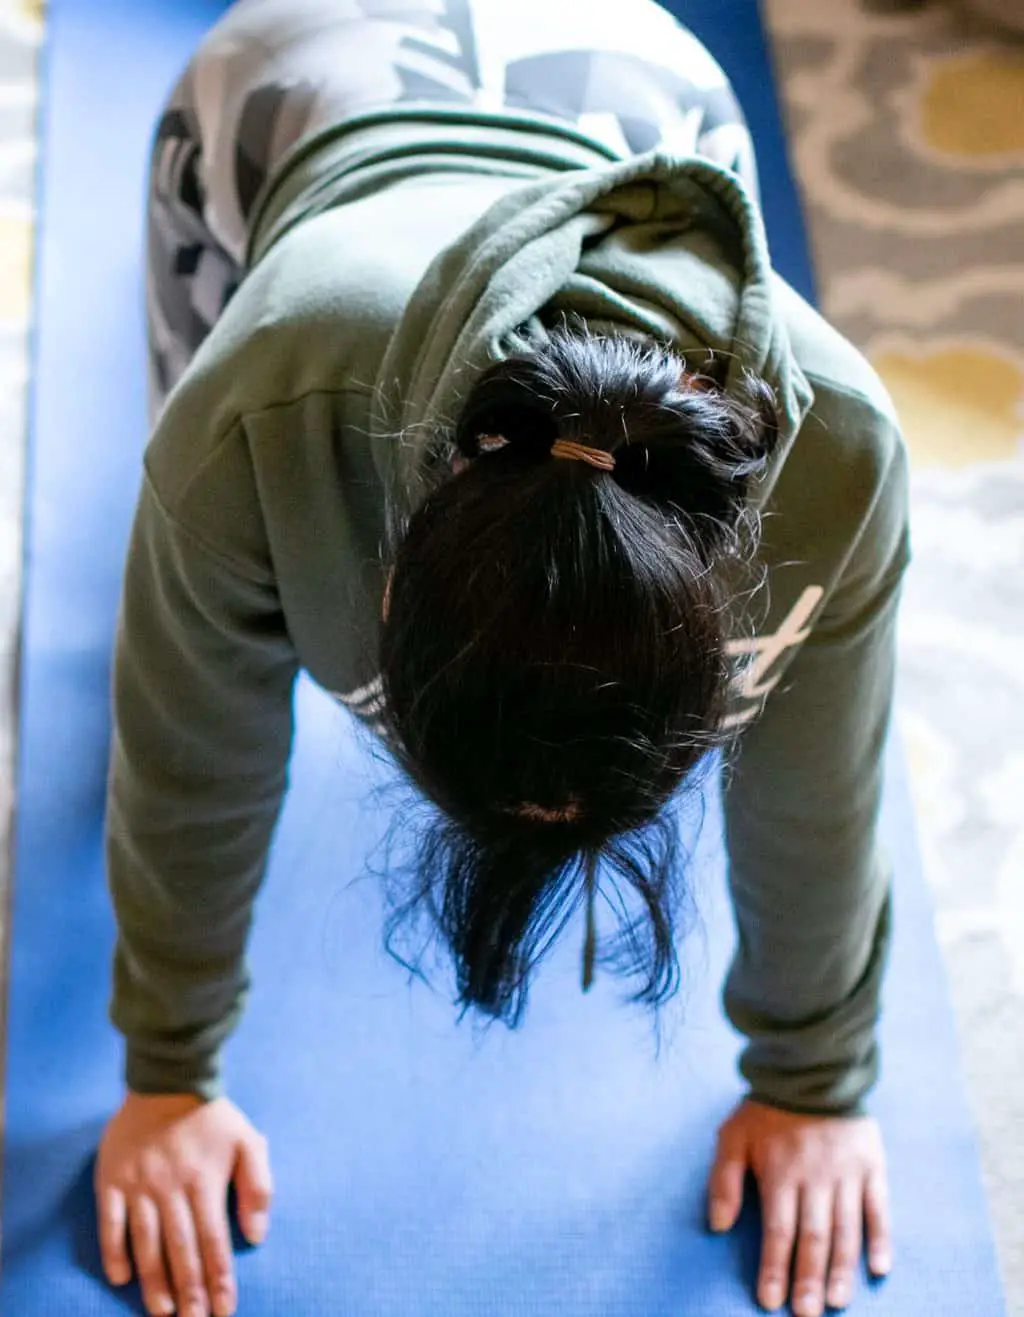 Woman doing push ups on blue yoga mat